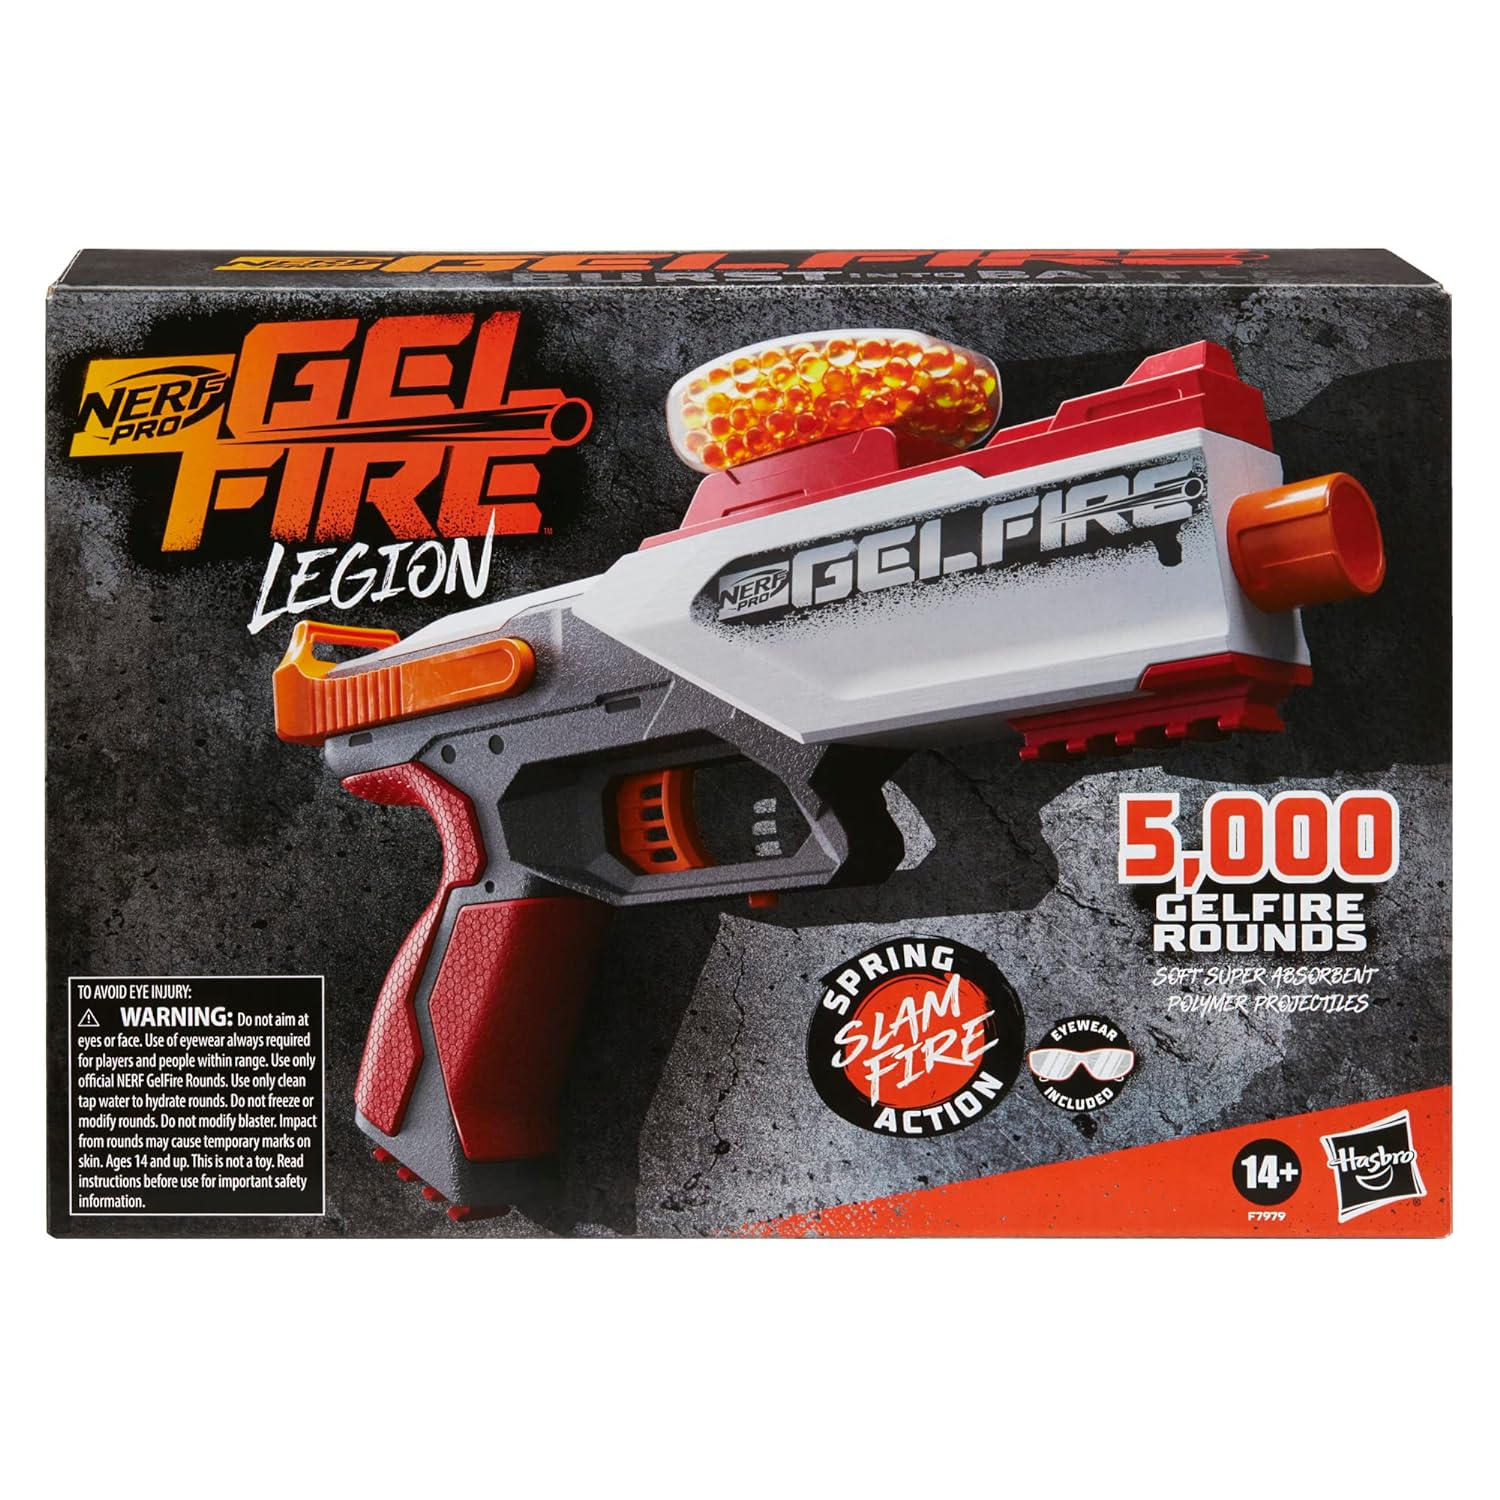 Hasbro Nerf Pro Gelfire Legion Spring Action Blaster, 5000 Gelfire Rounds, 130 Round Hopper, Protective Eyewear, Slam Fire, Ages 14